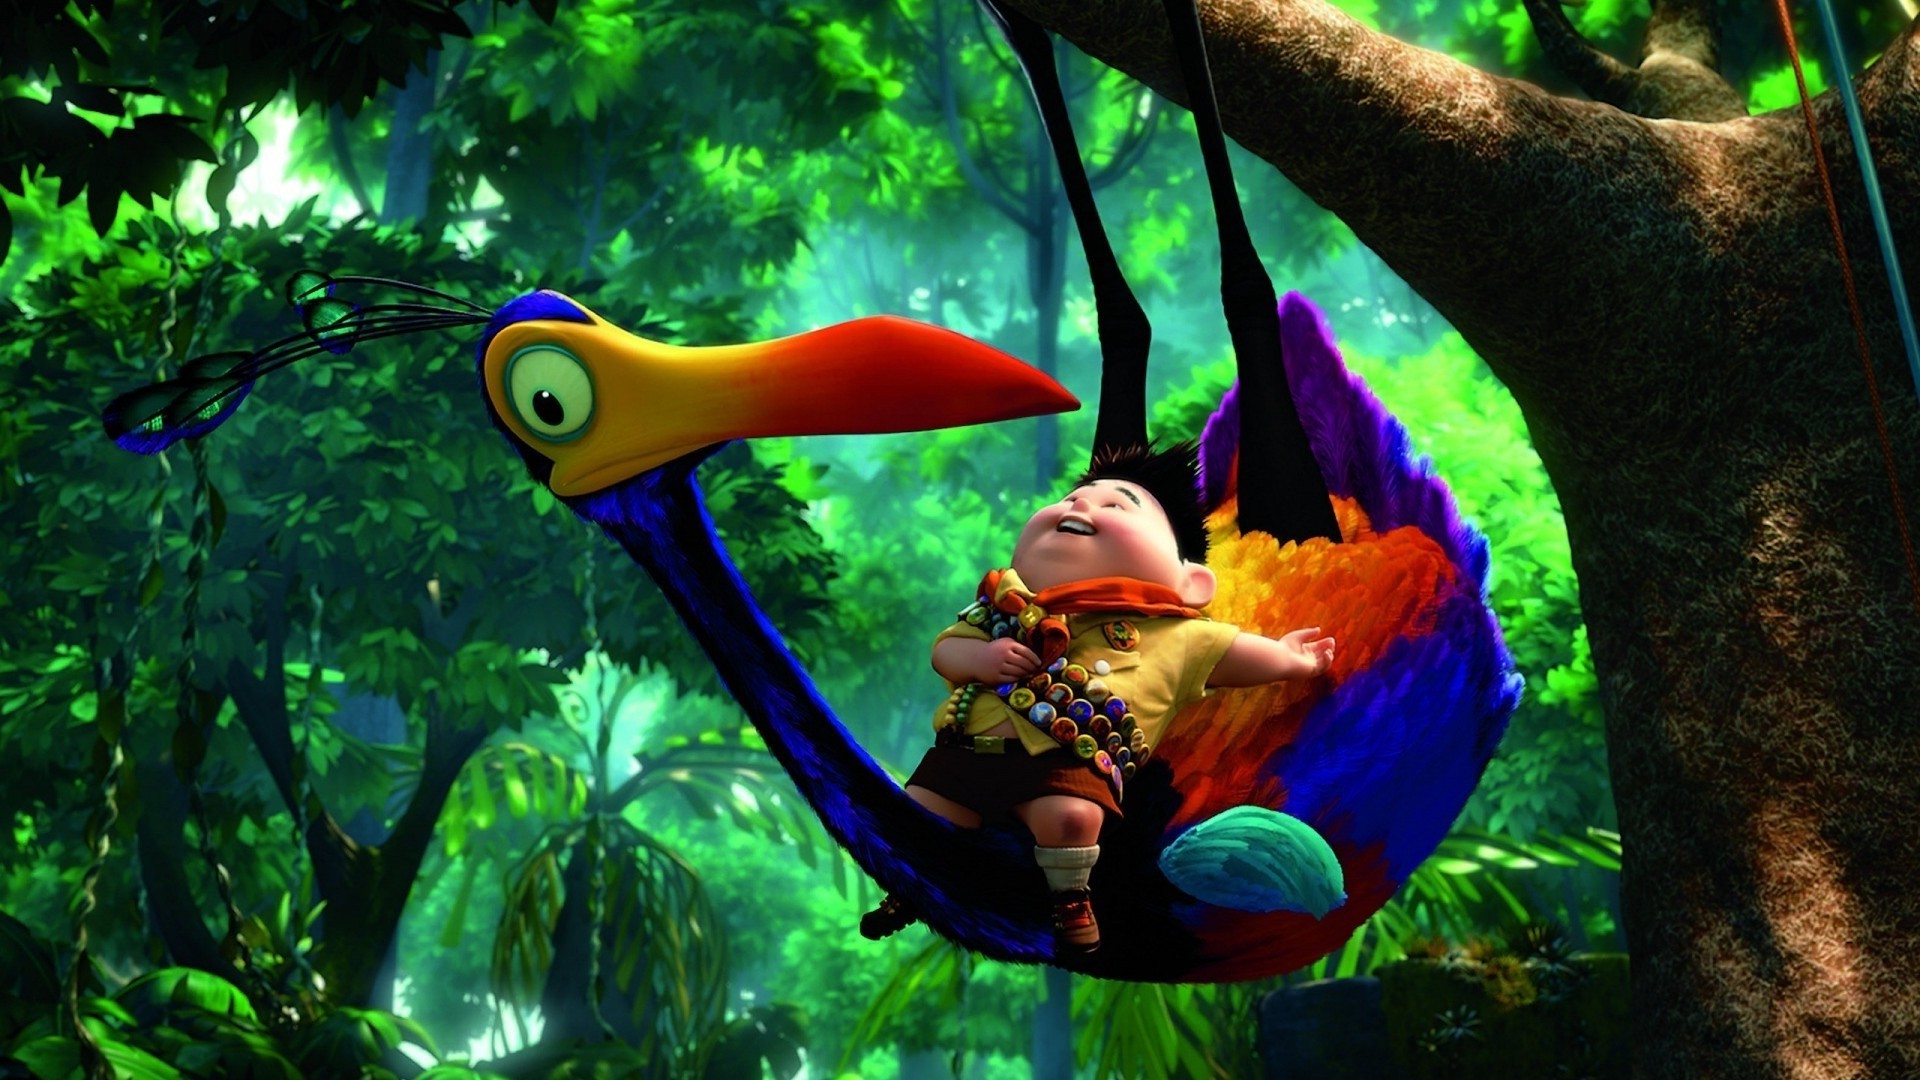 disney pixar wallpaper,animated cartoon,natural environment,jungle,tree,organism